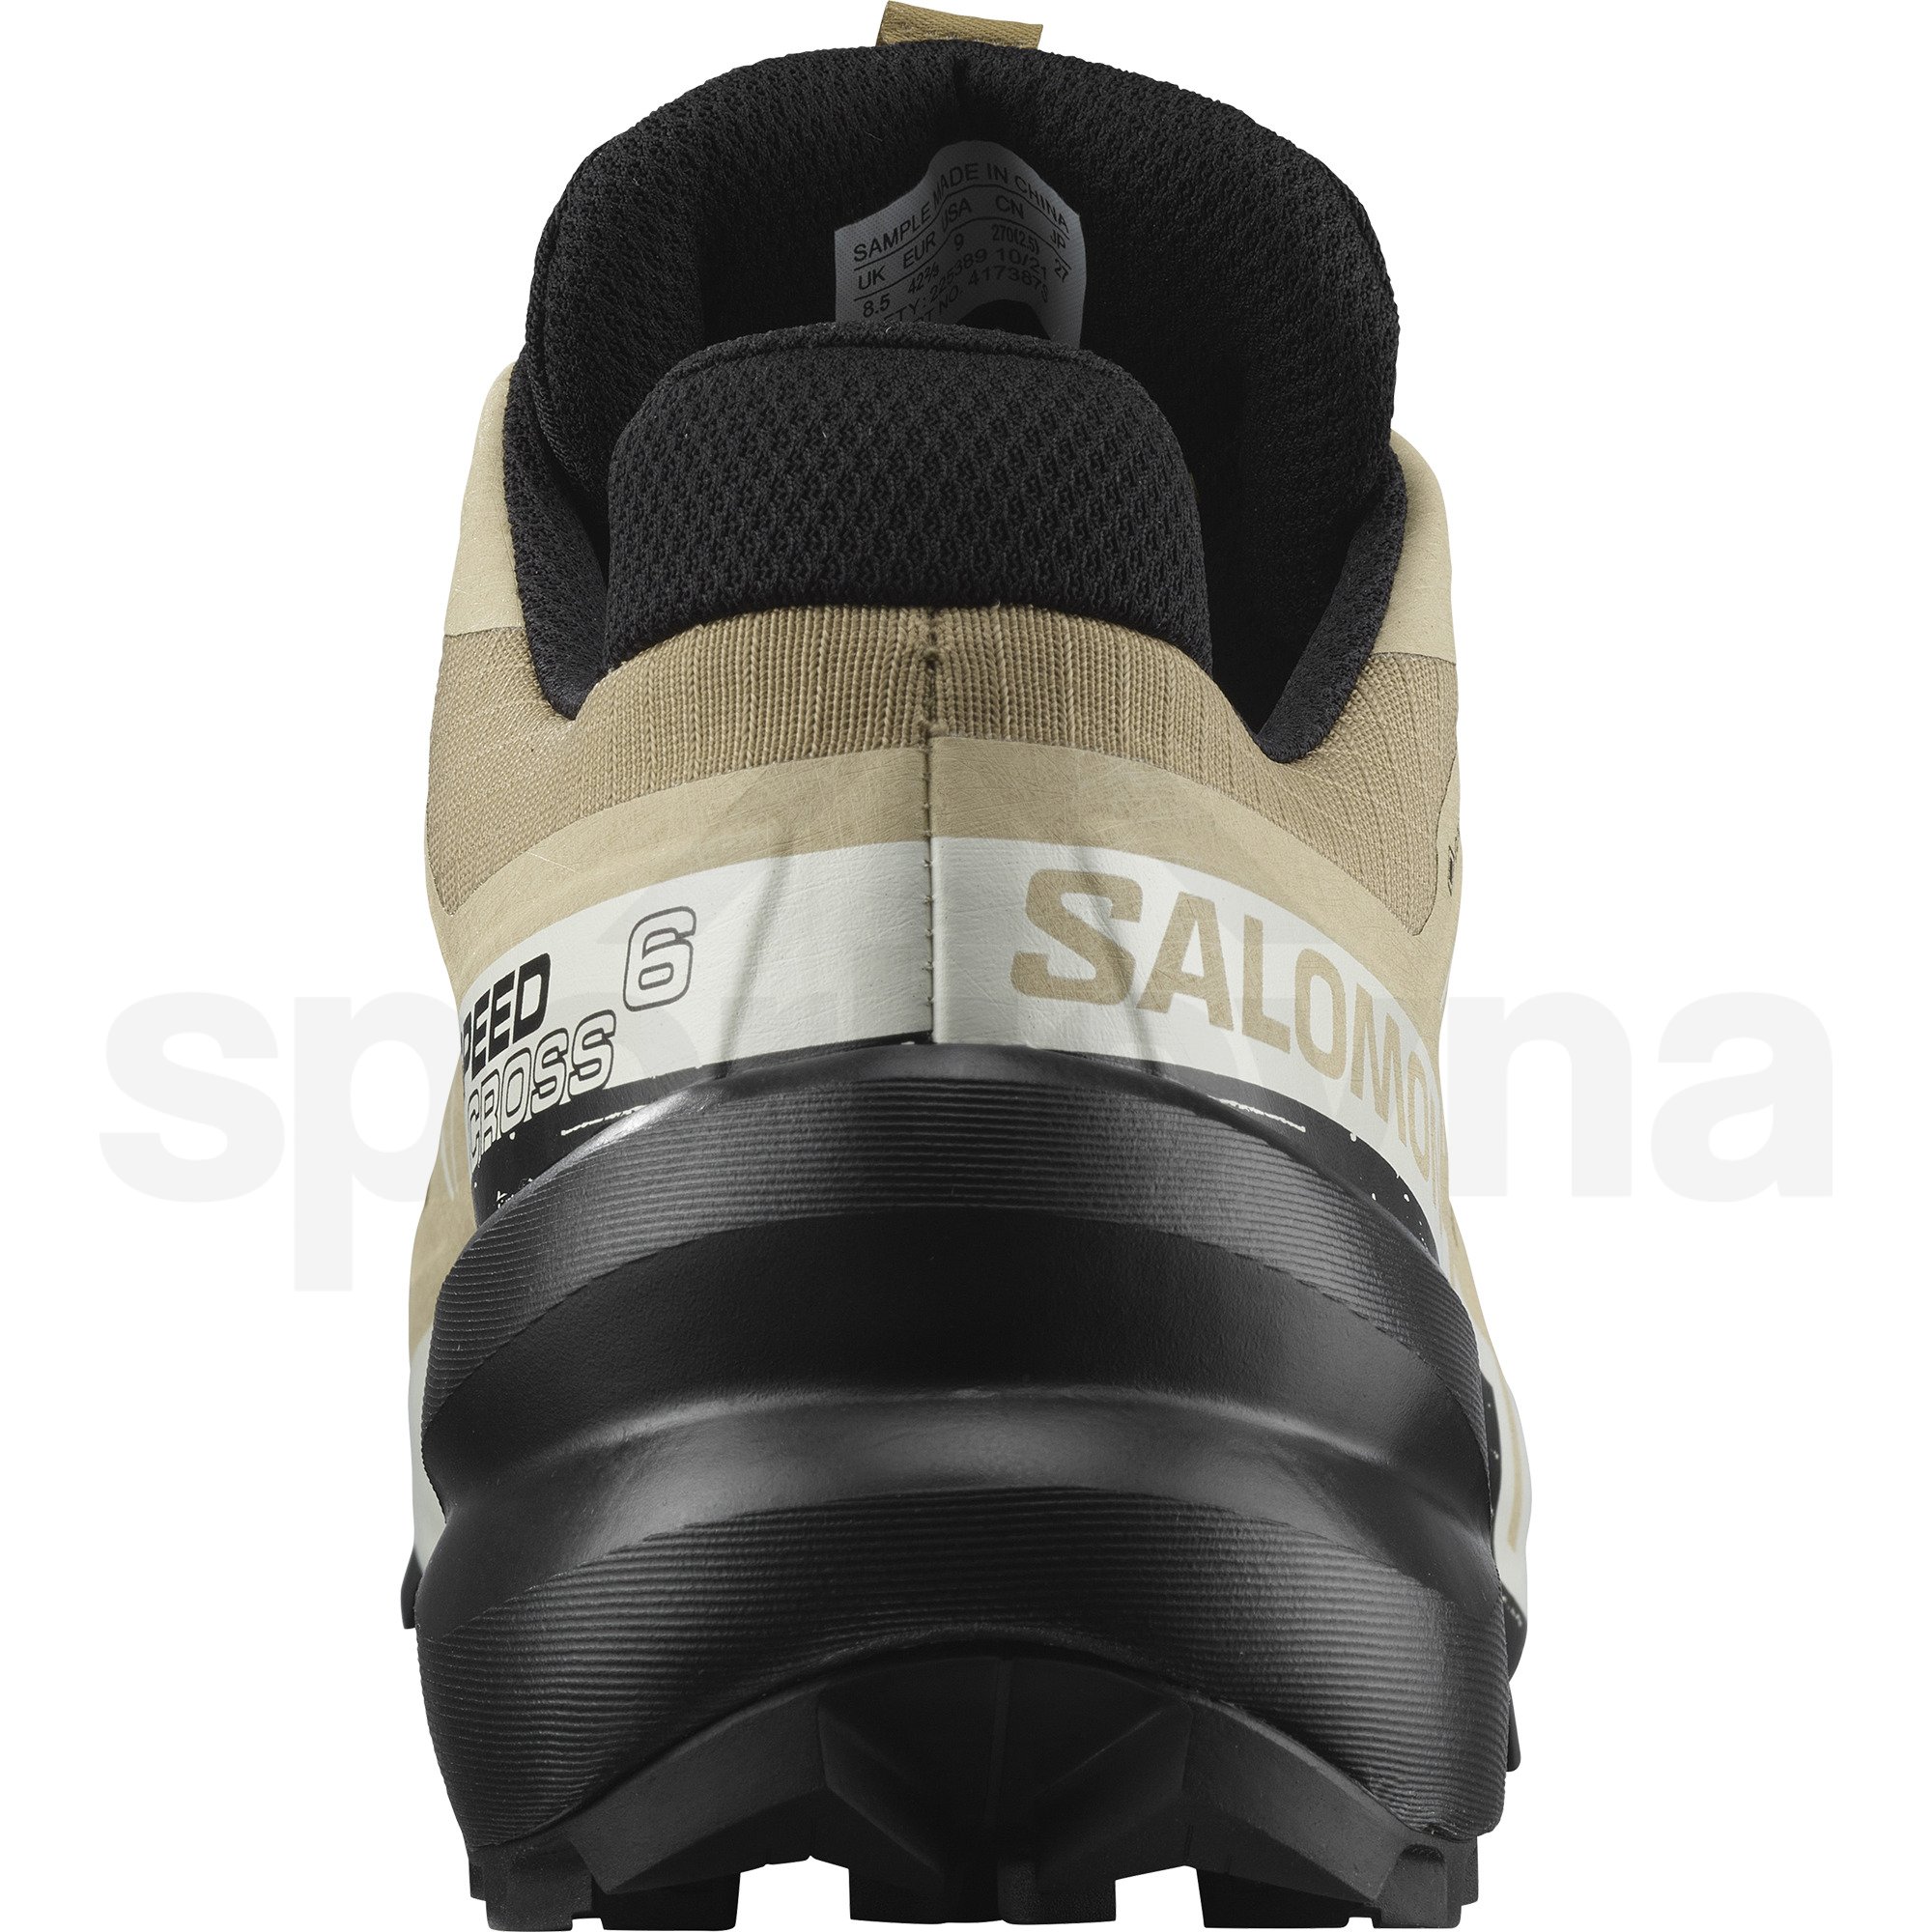 Obuv Salomon Speedcross 6 GTX M - hnědá/černá